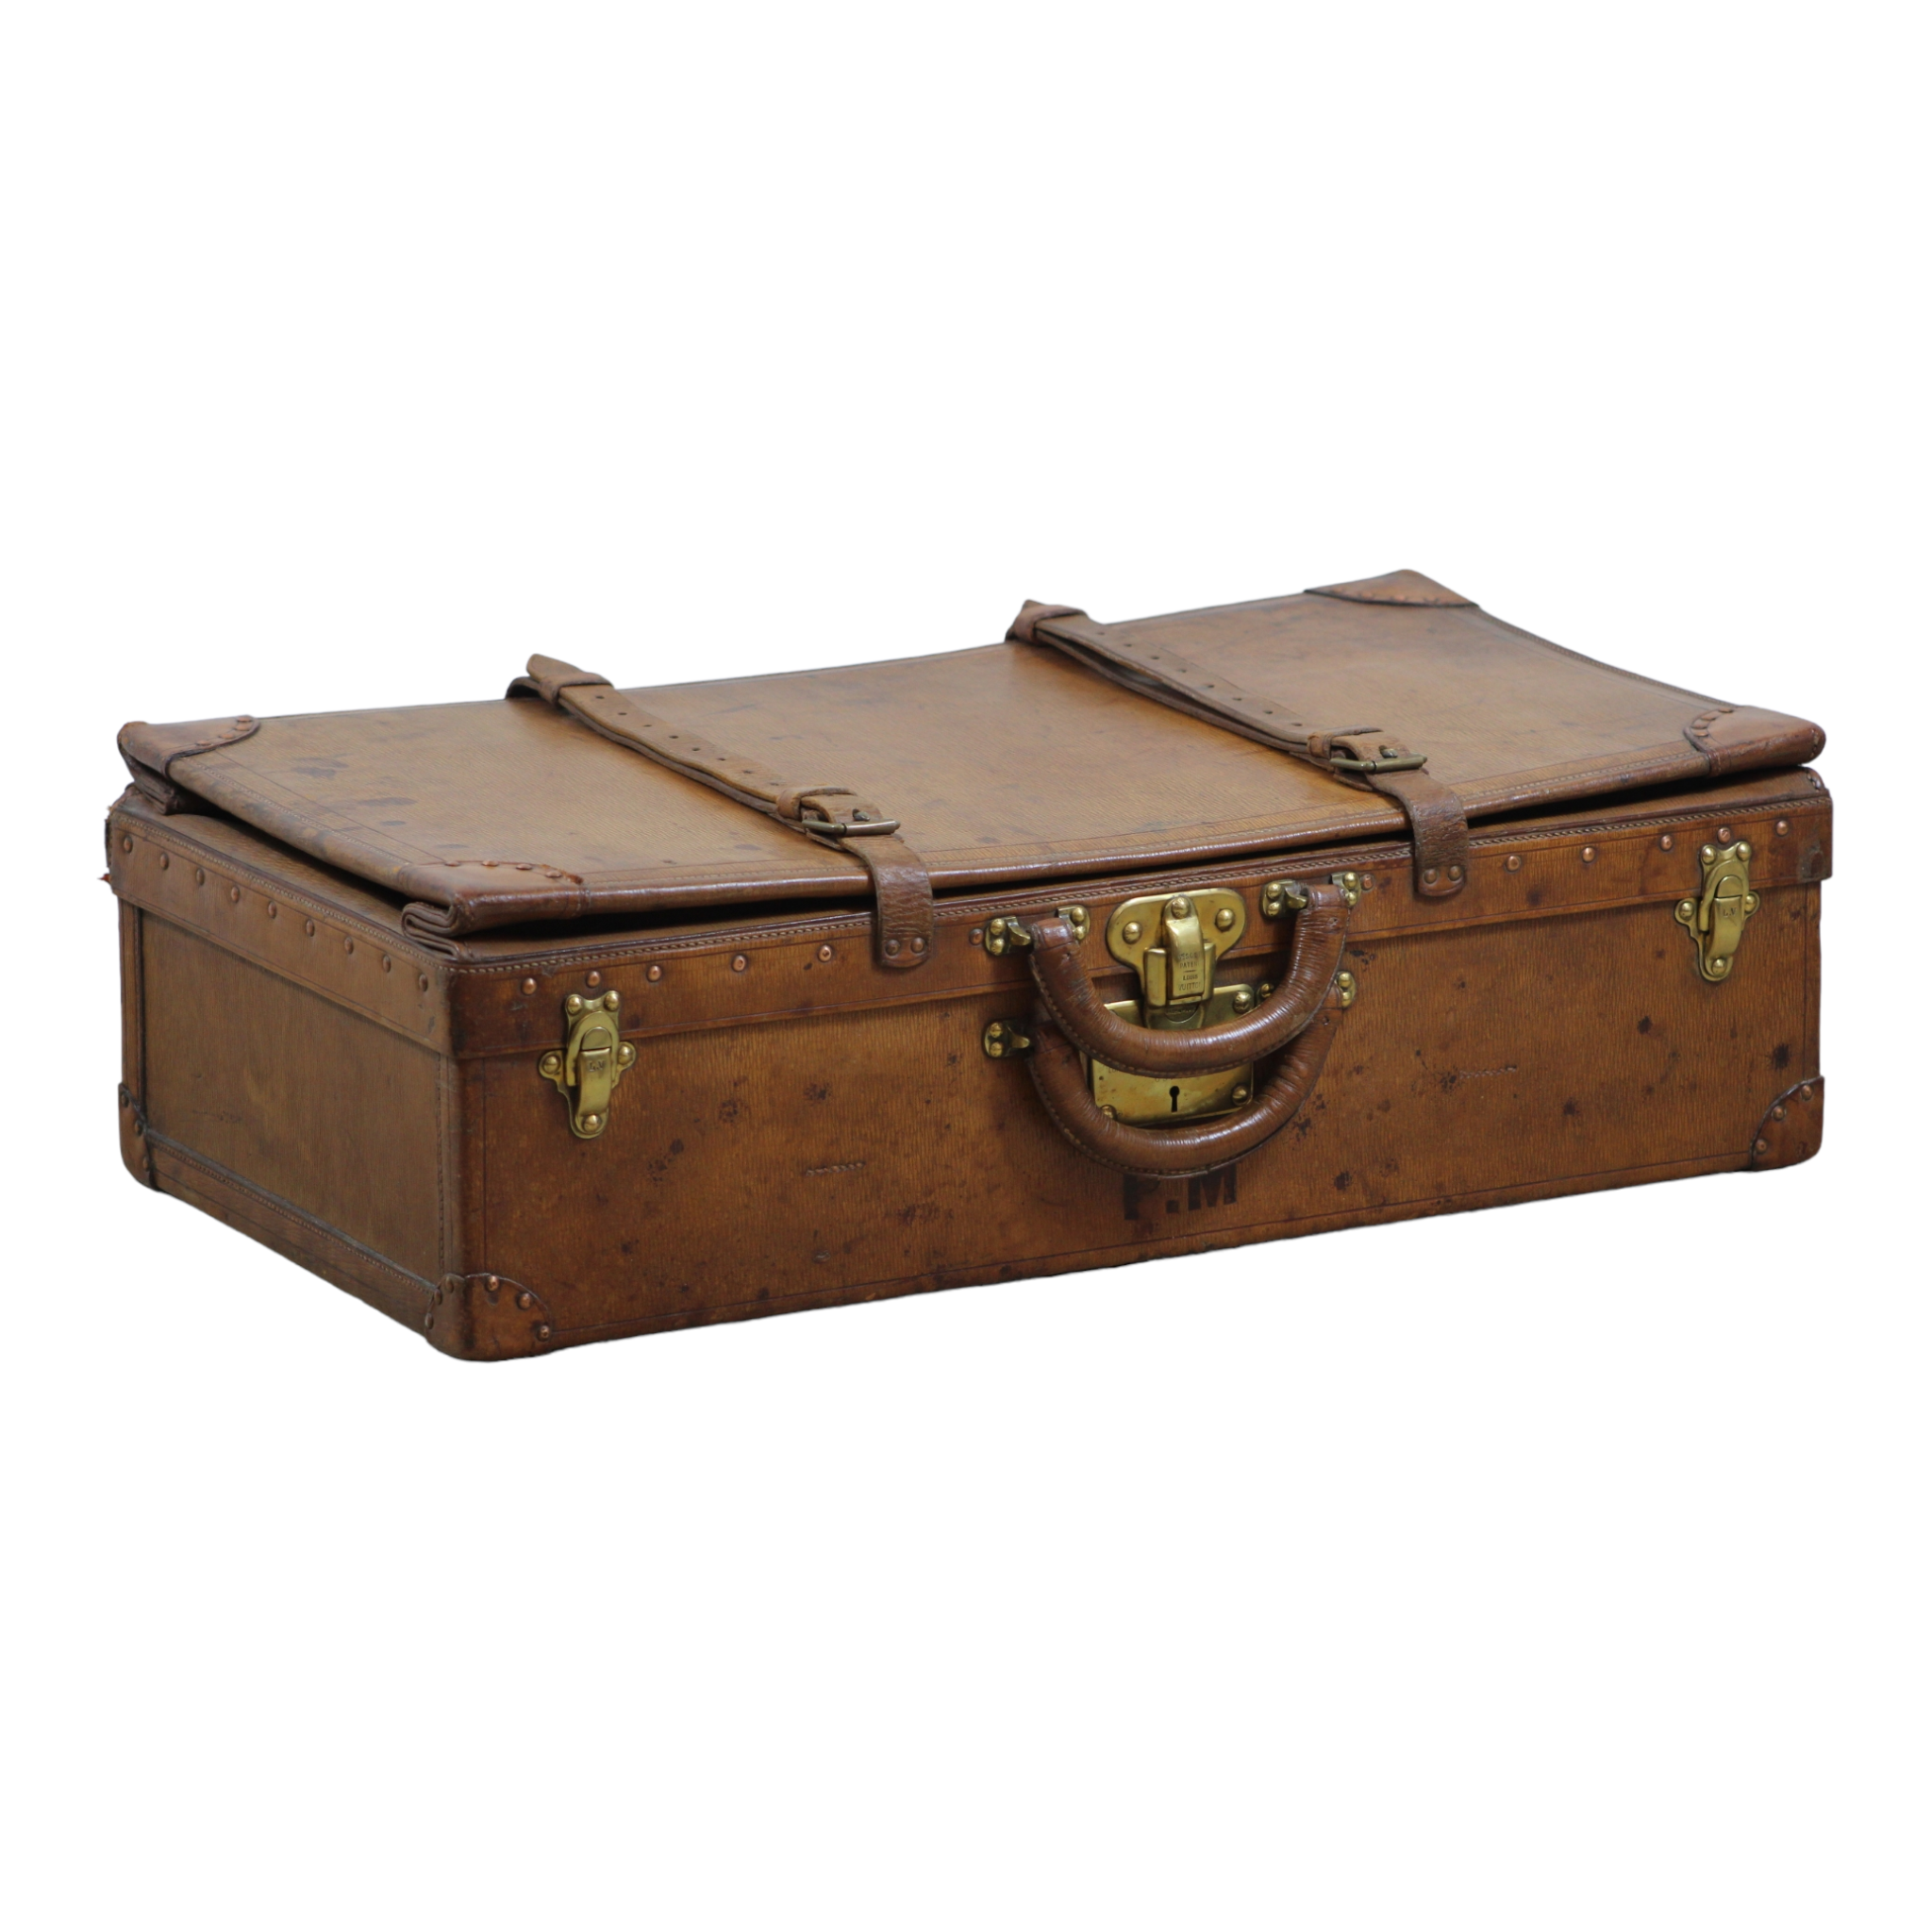 Louis Vuitton Expandable Suitcase Named London, Dated 1900. Auction